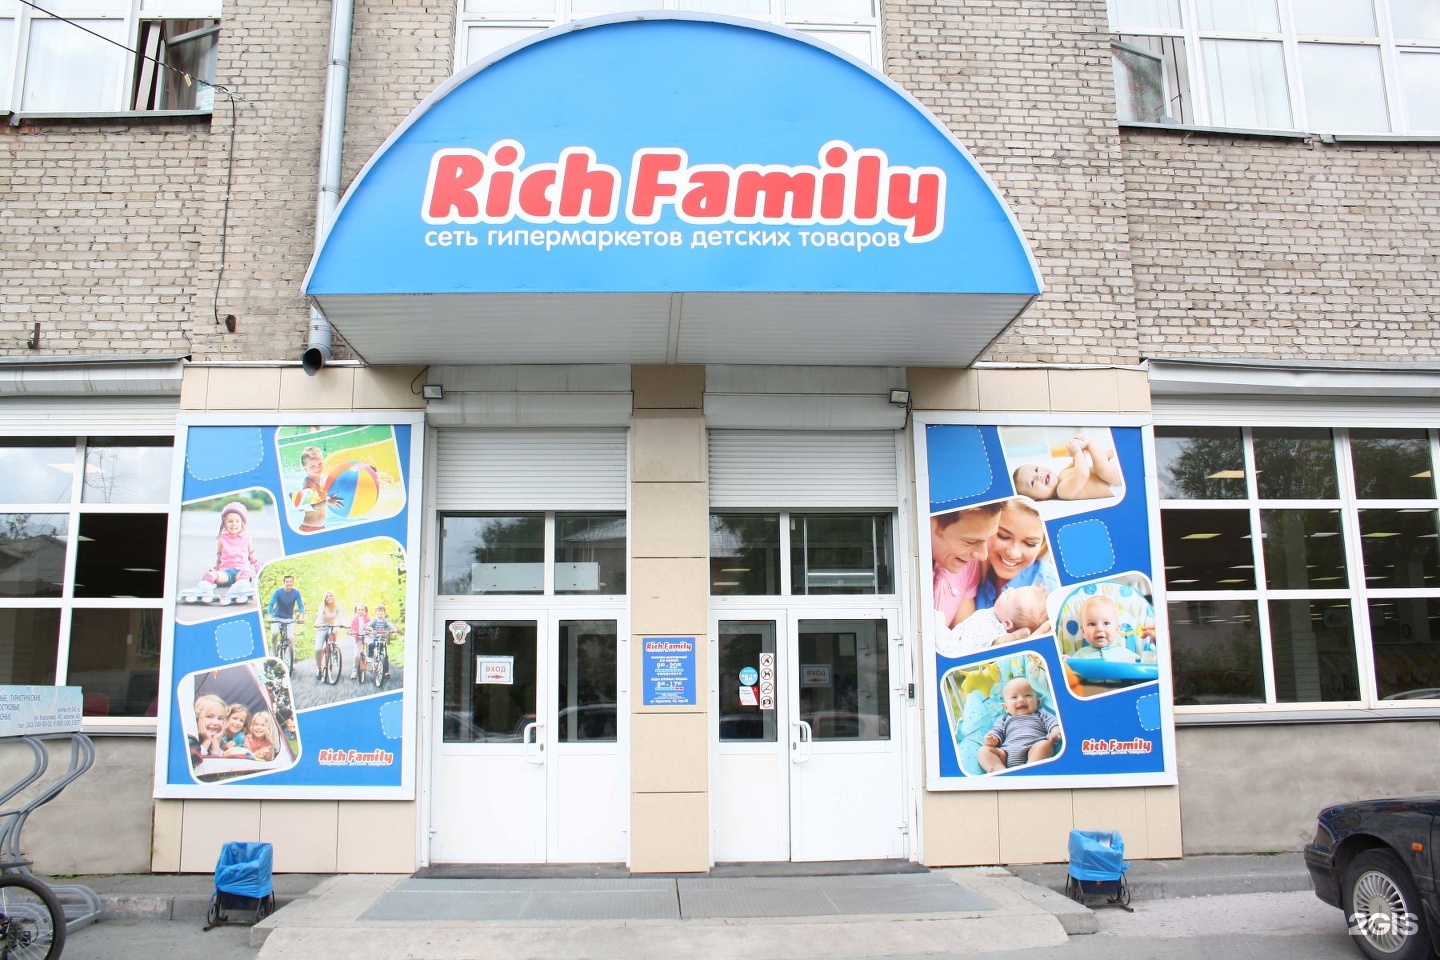 Rich Family Интернет Магазин Ижевск